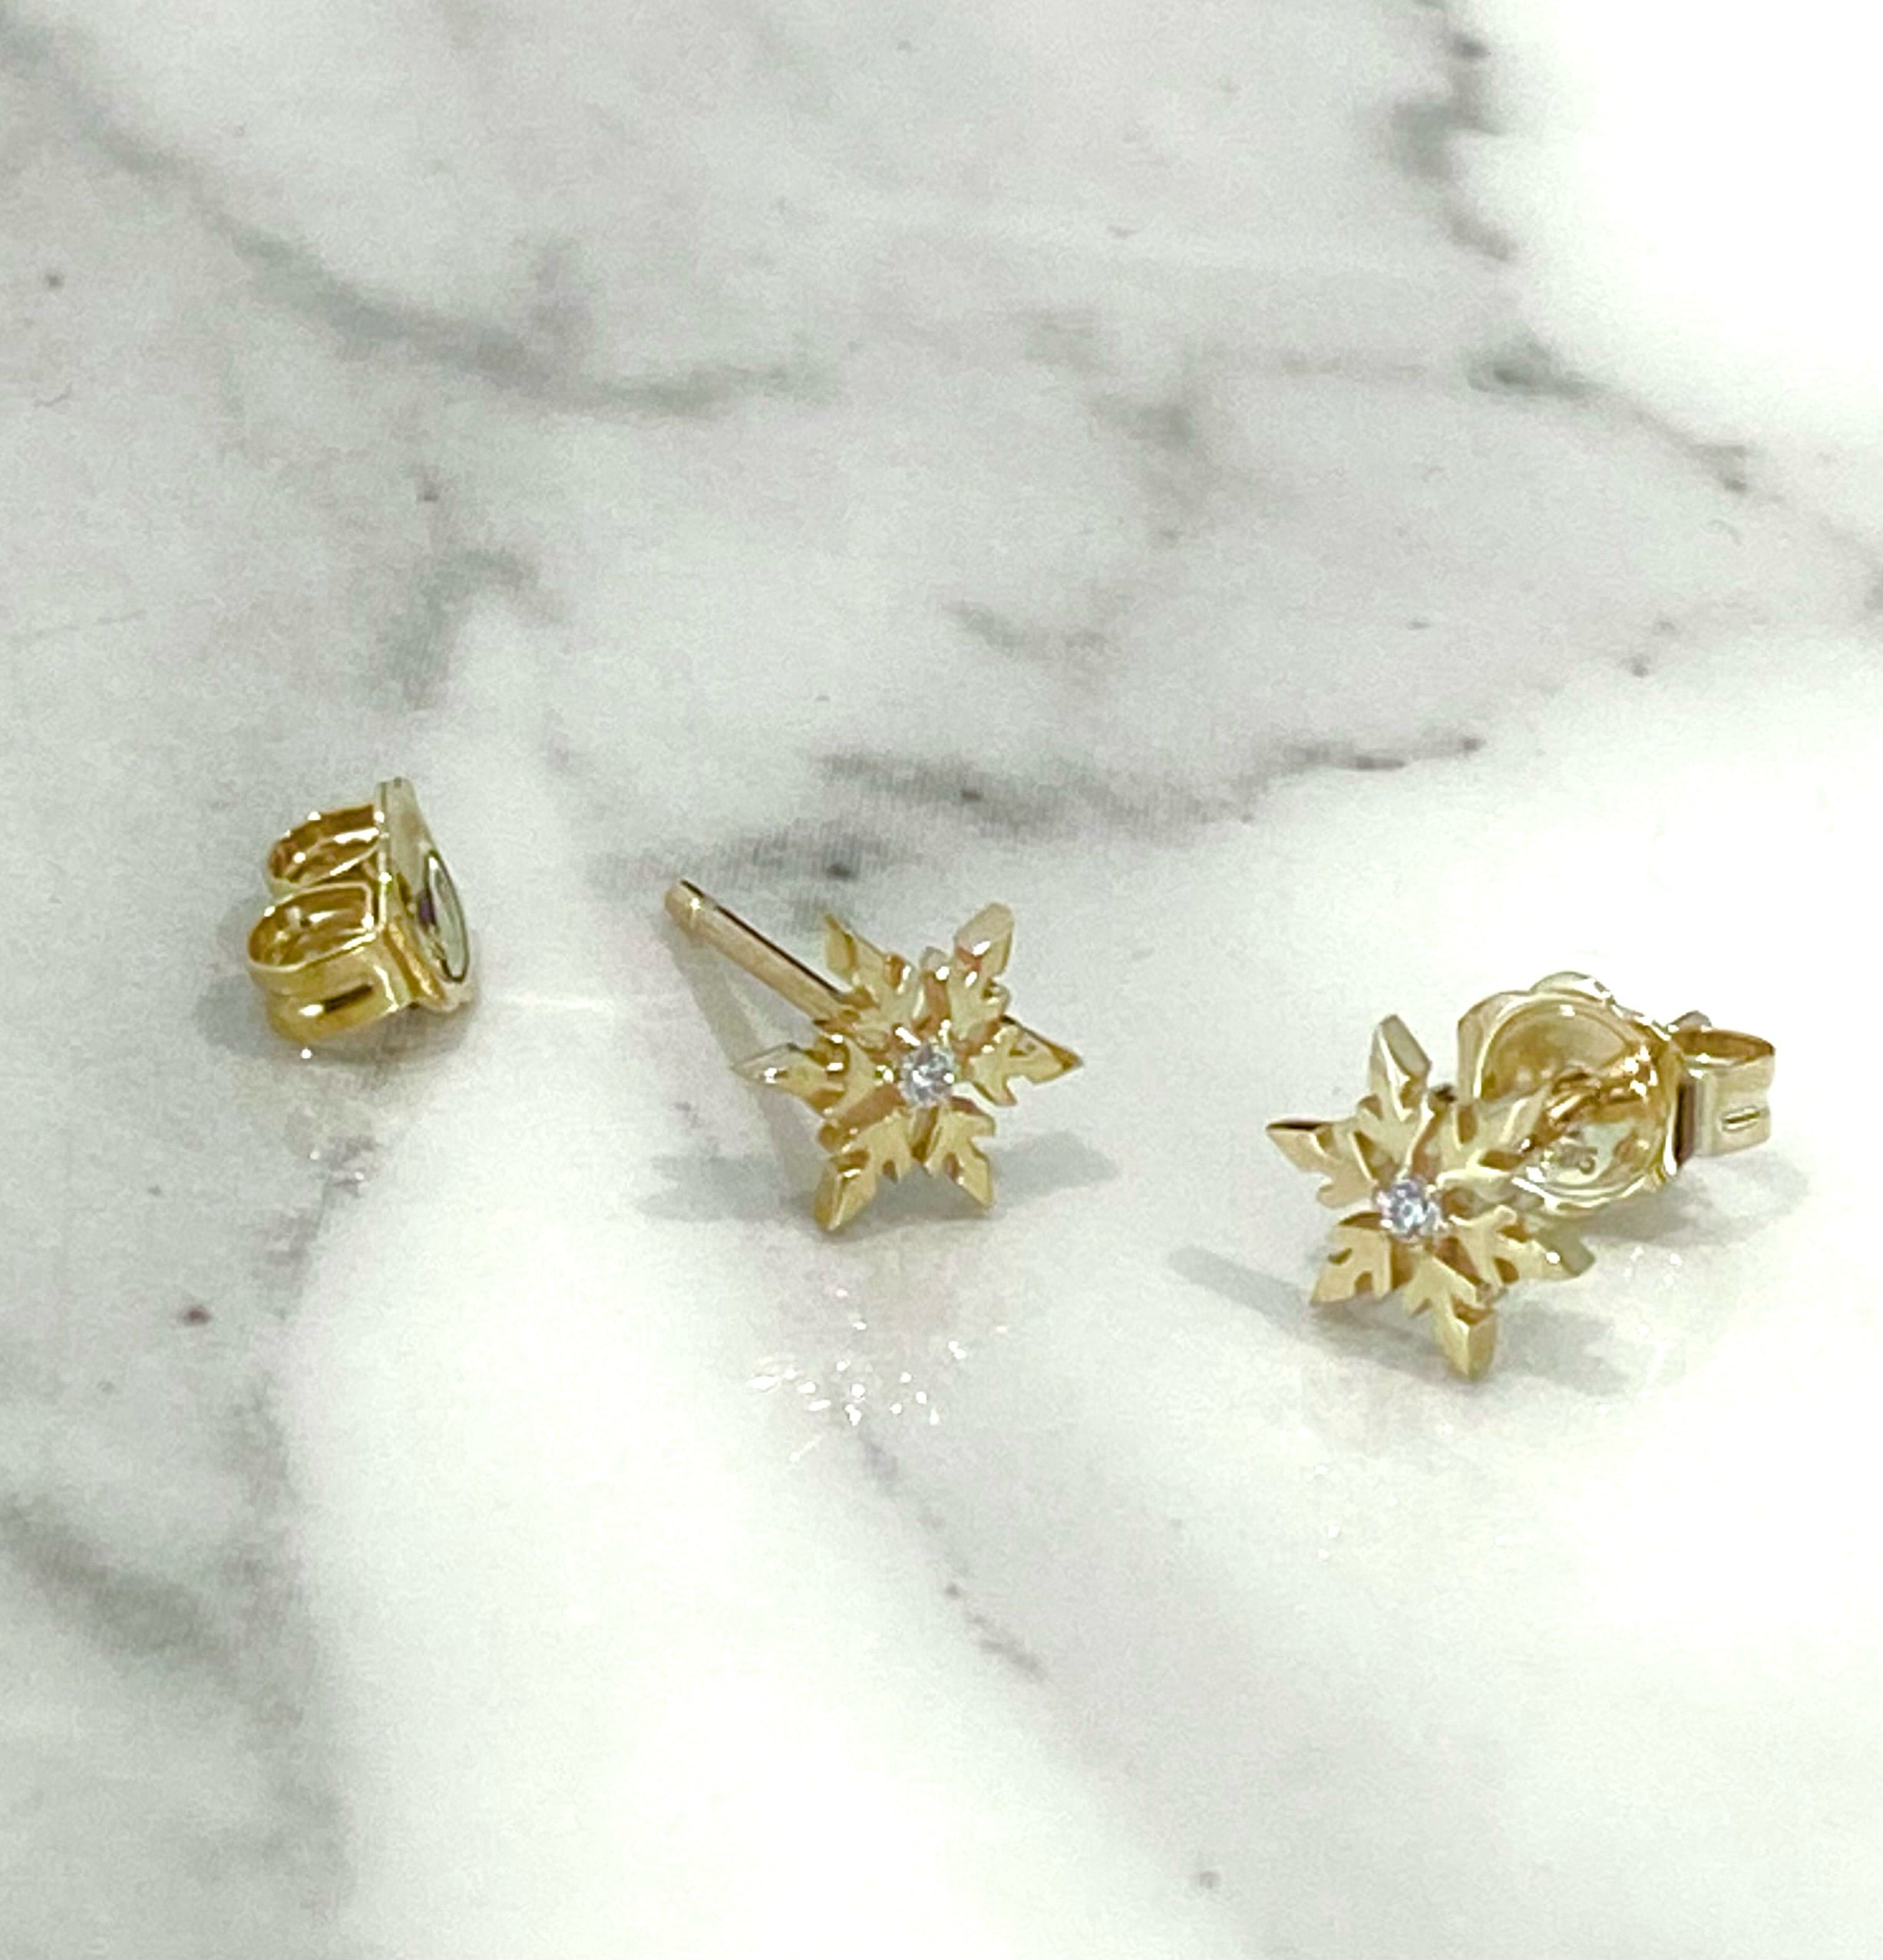 SnowJewel Snowflake Stud Earrings in 9ct Yellow Gold